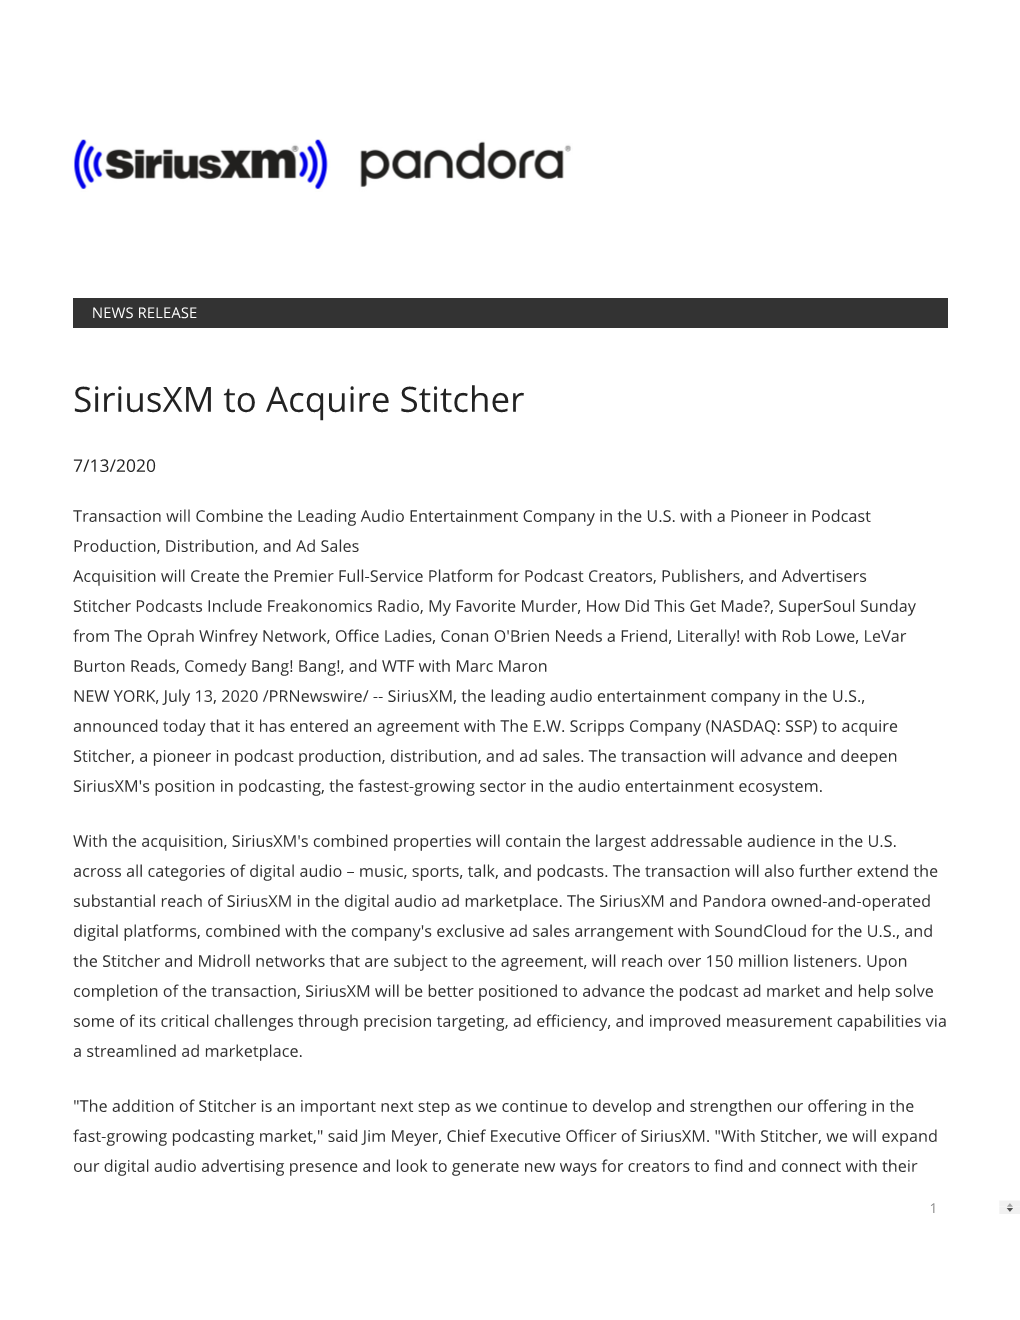 Siriusxm to Acquire Stitcher